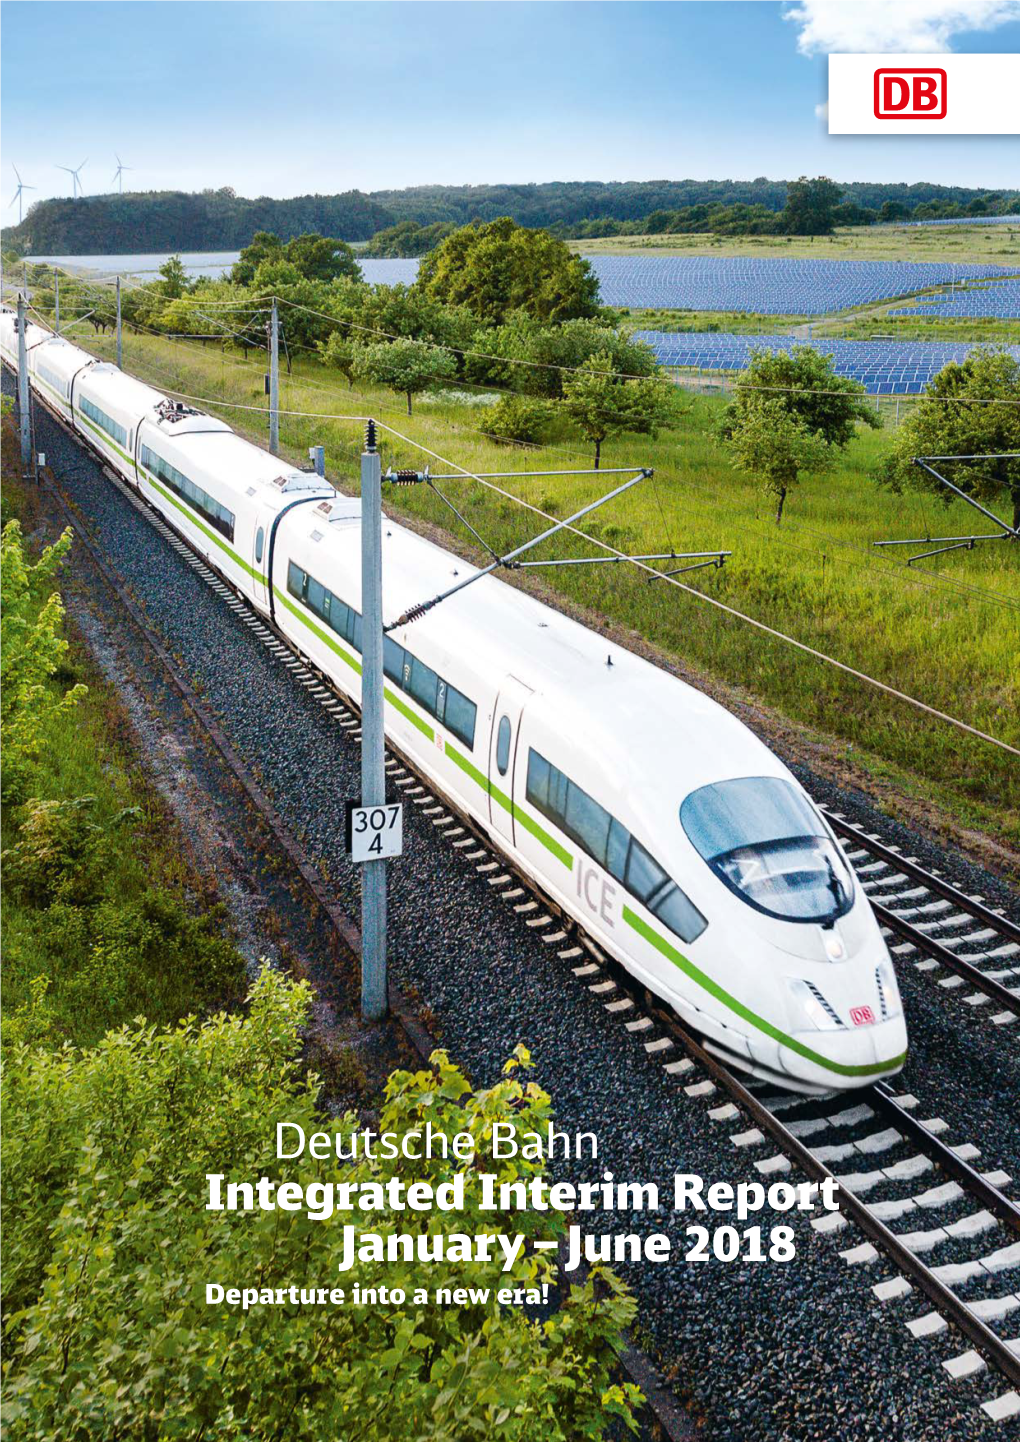 Deutsche Bahn Integrated Interim Report January – June 2018 Departure Into a New Era! at a Glance